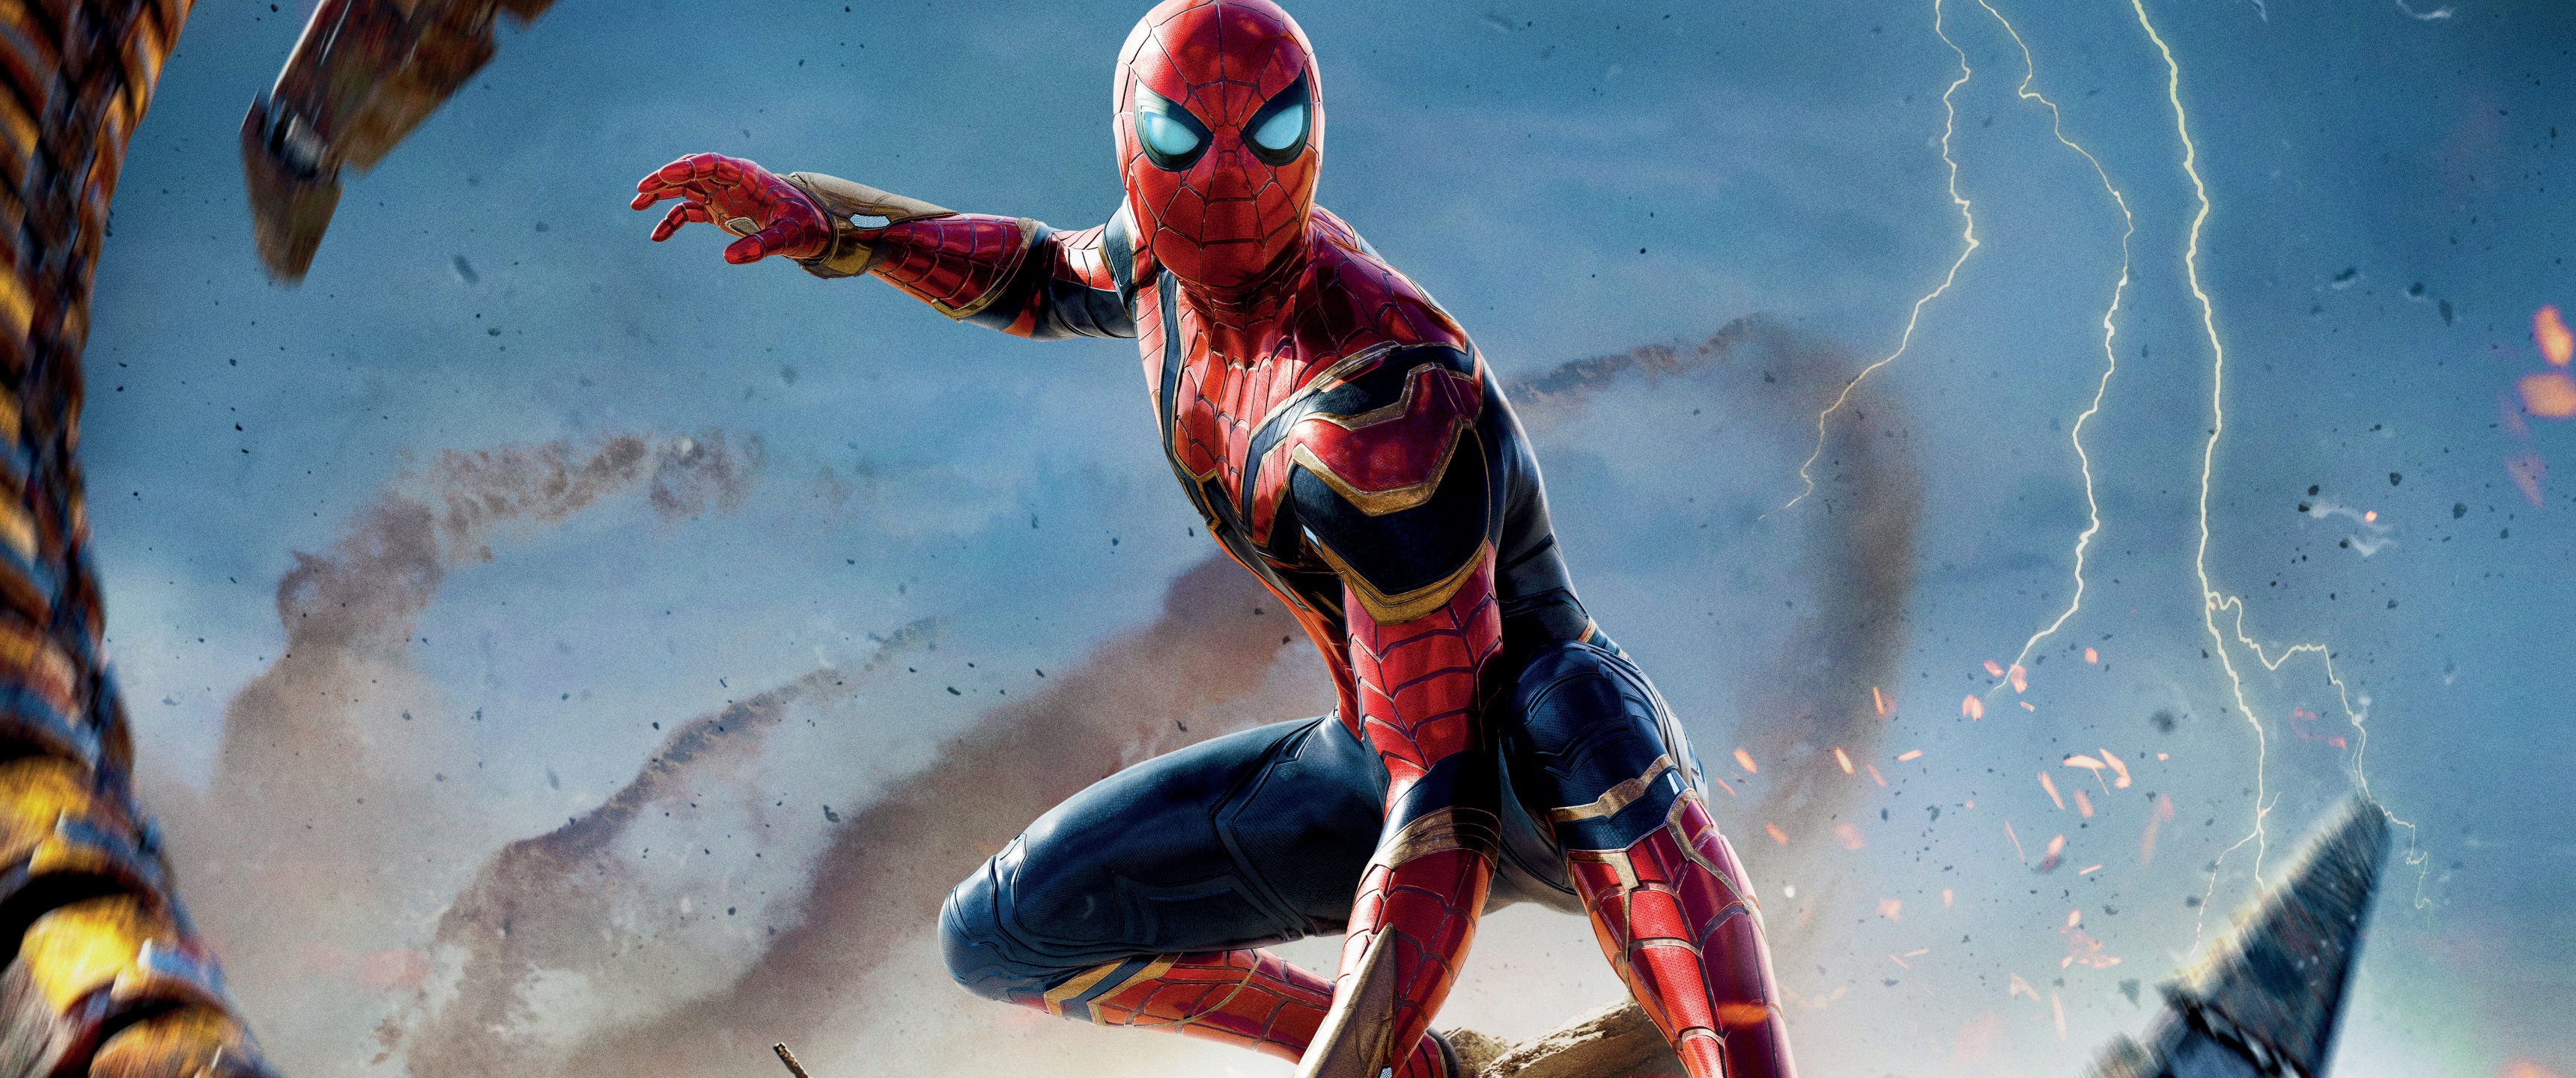 Spider-Man: No Way Home Wallpaper 4K, 2021 Movies, Movies, #6831